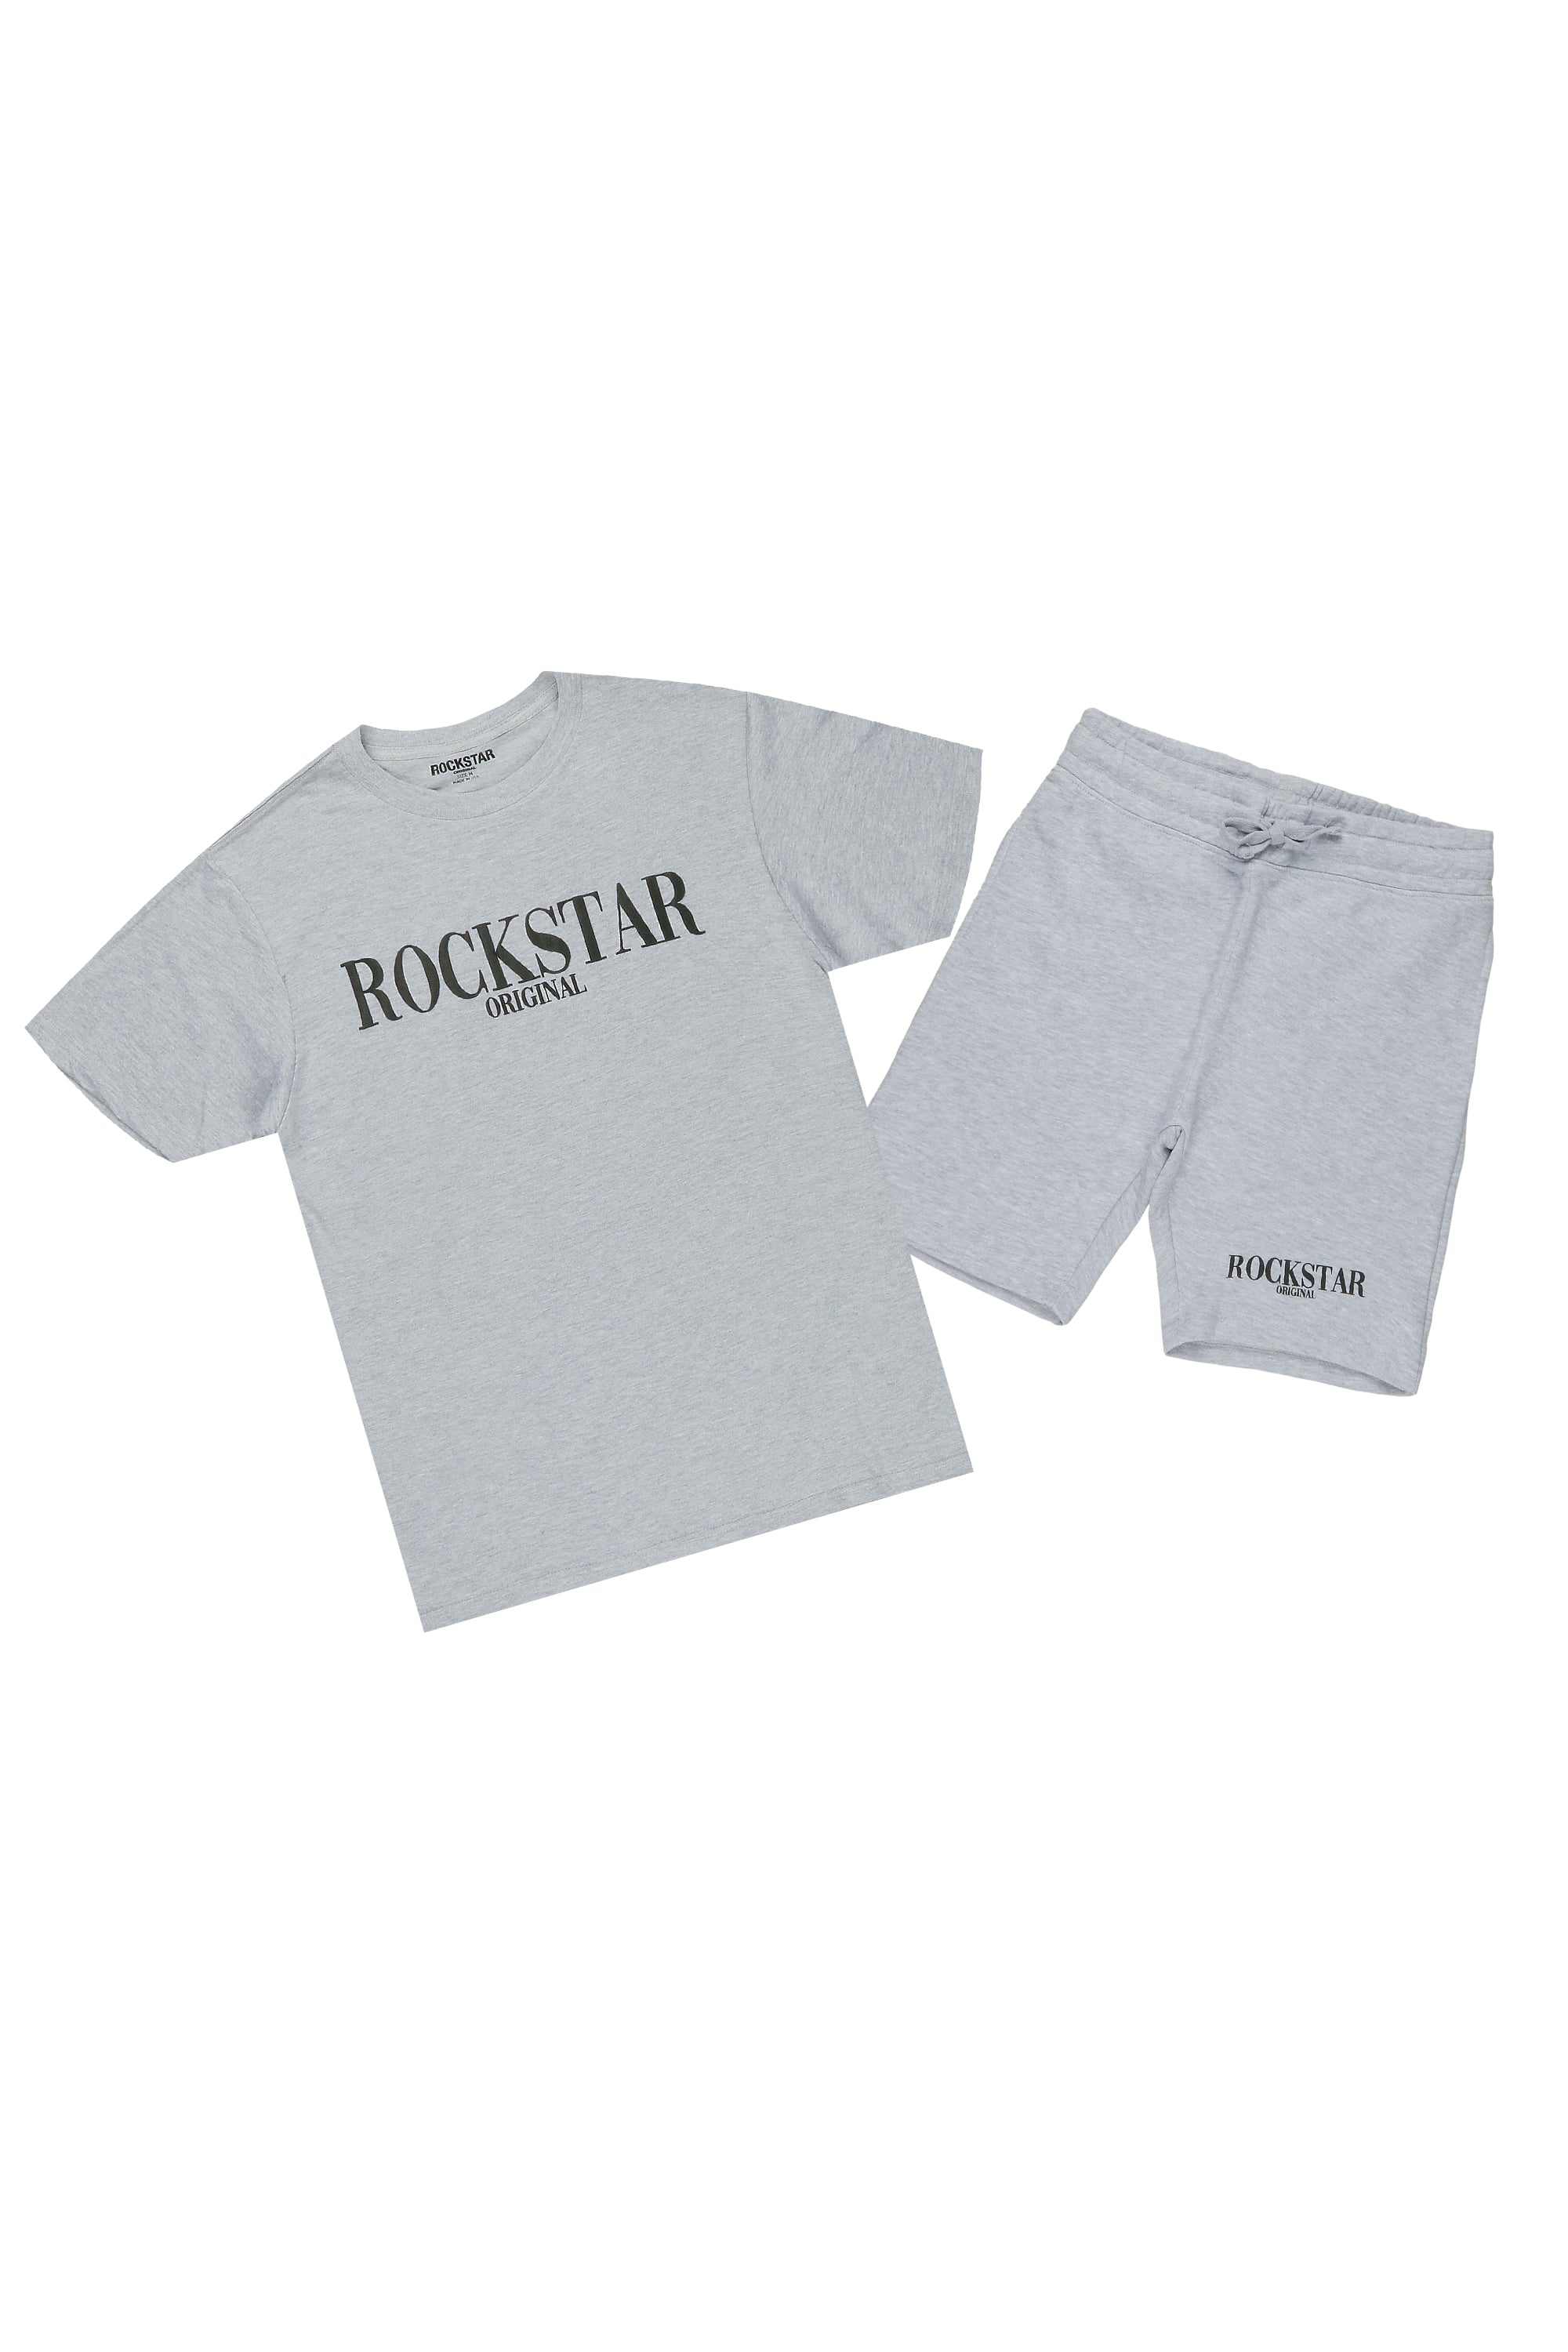 Octavio Grey T-Shirt/Short Set